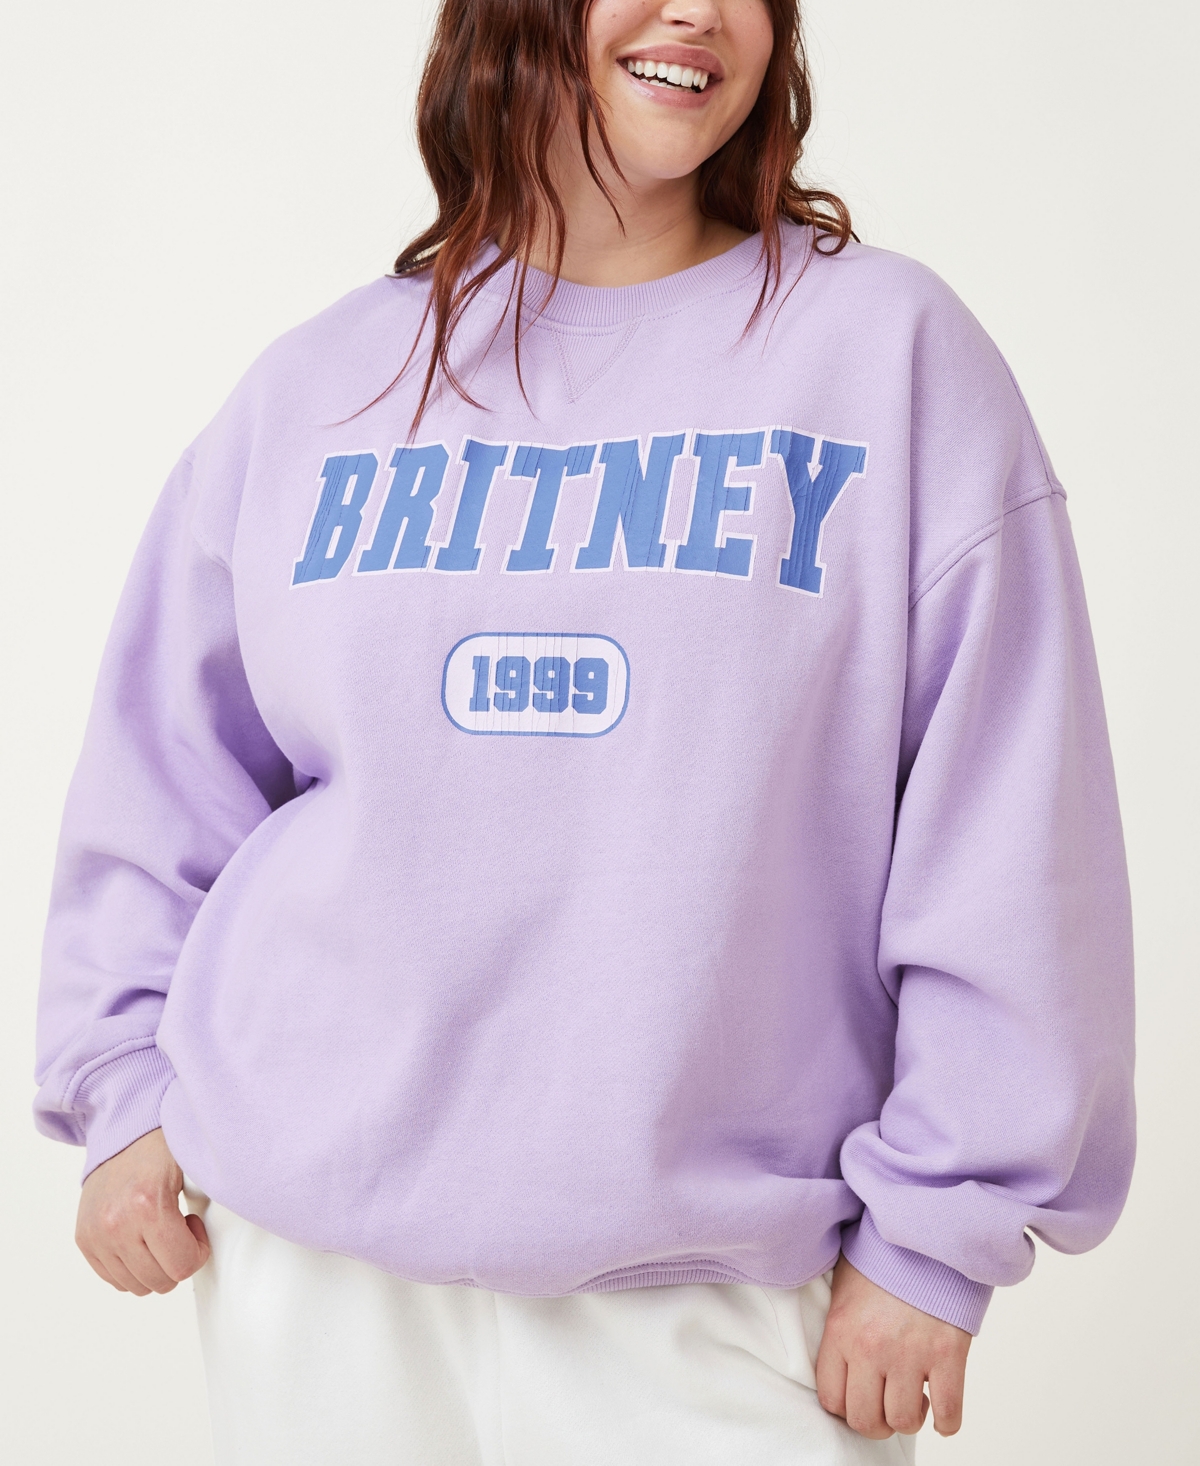 Cotton On Trendy Plus Size Britney Spears Crew Sweatshirt